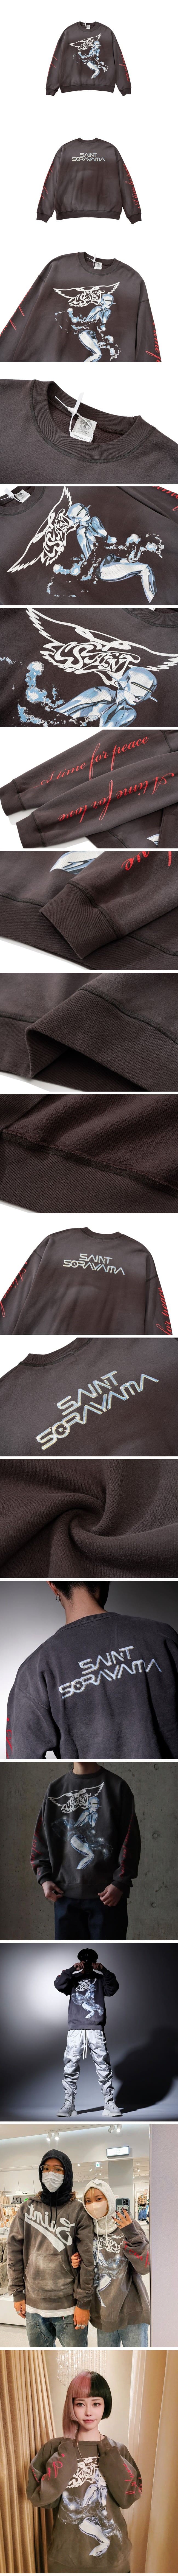 SAINT Mxxxxxx SORAYAMA Sweat Shirt セントマイケル 空山基 コラボ スウェット